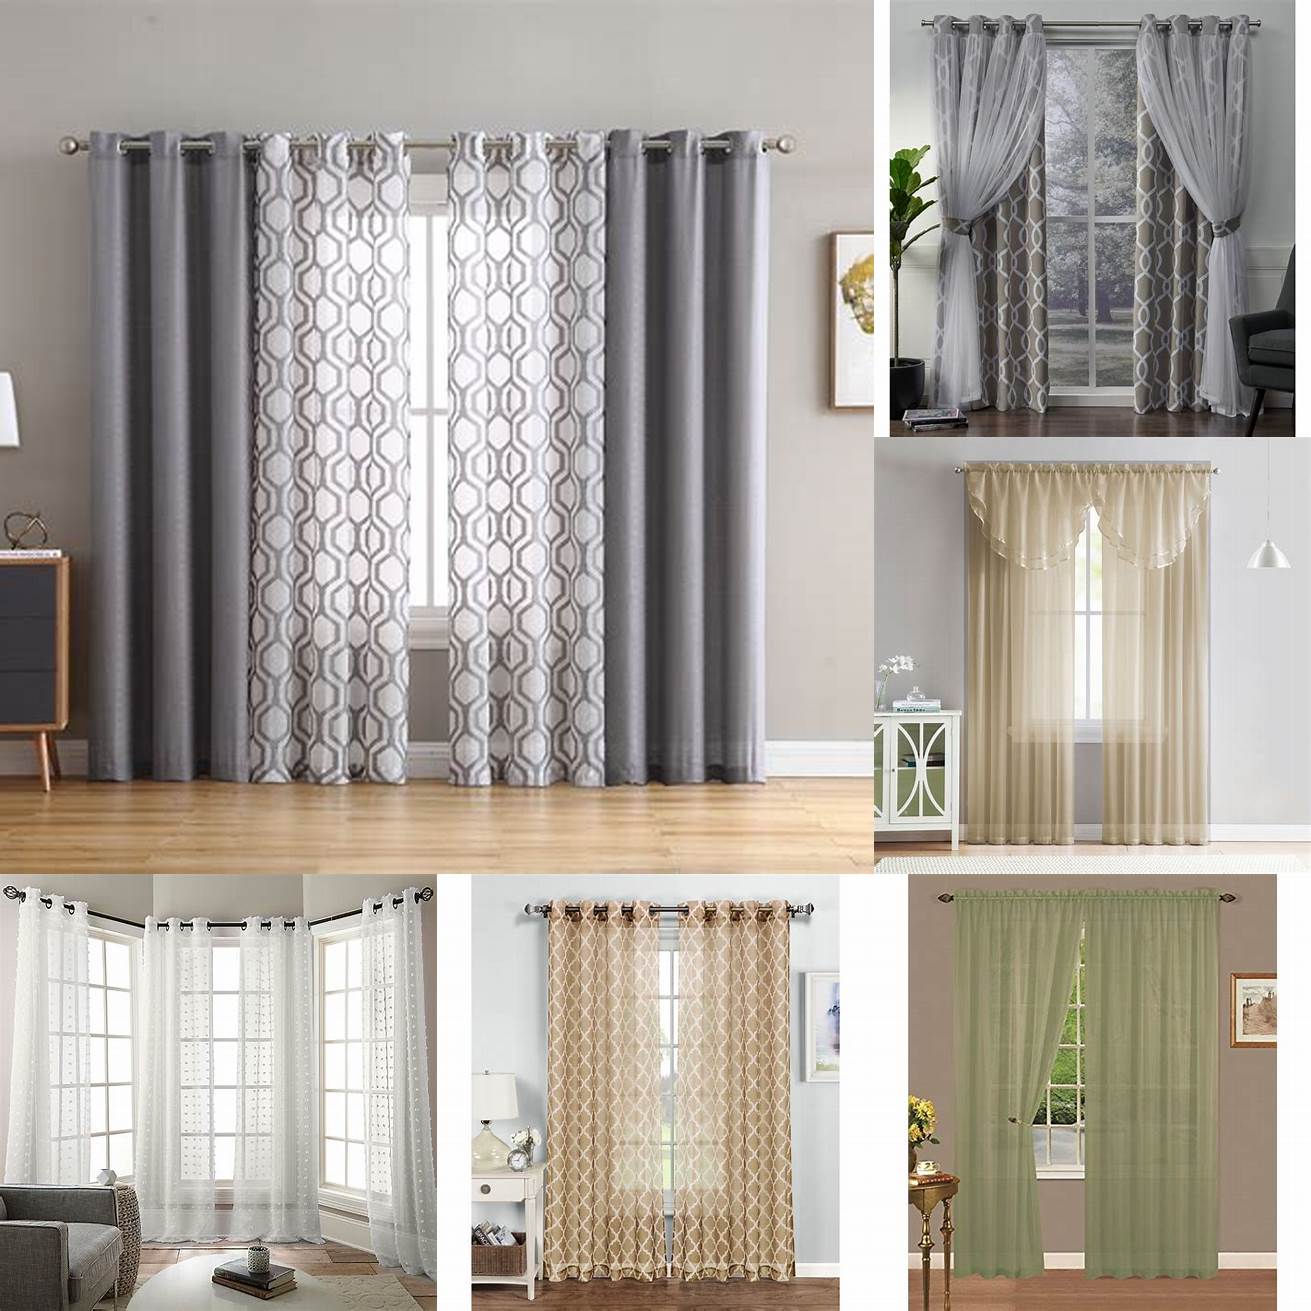 4 Sheer curtains